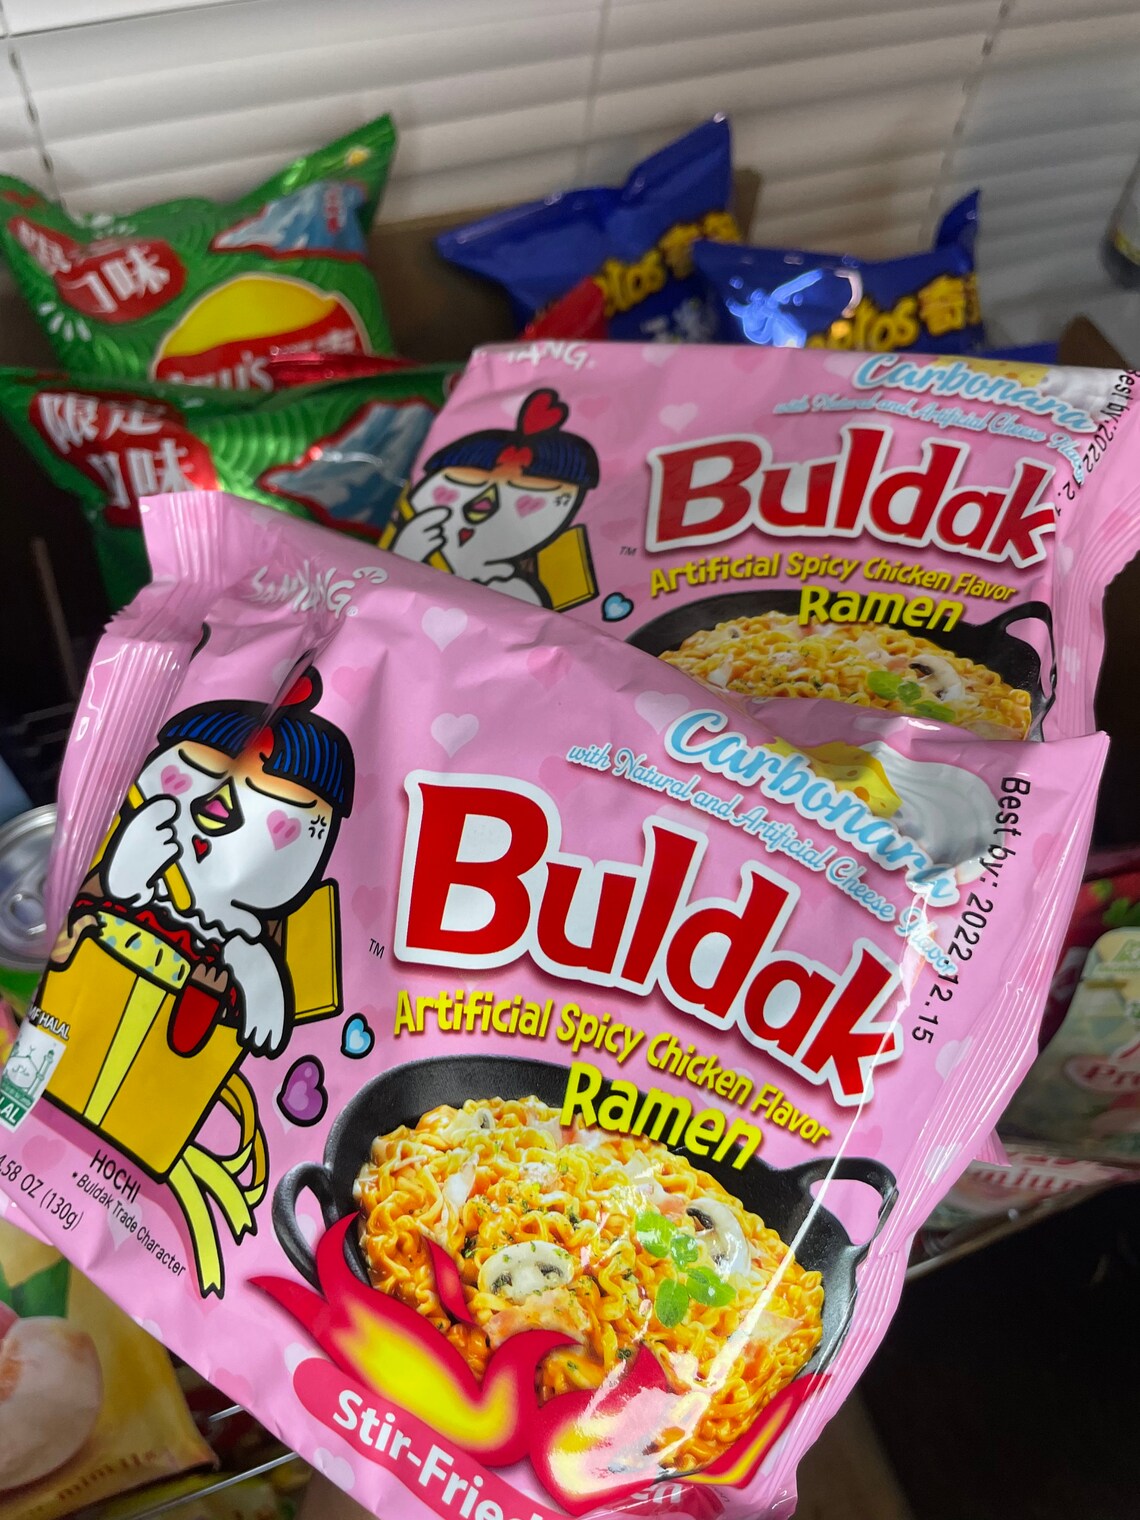 Hot & 2x Spicy Ramen Samyang Buldak Instant Ramen Noodles - Etsy